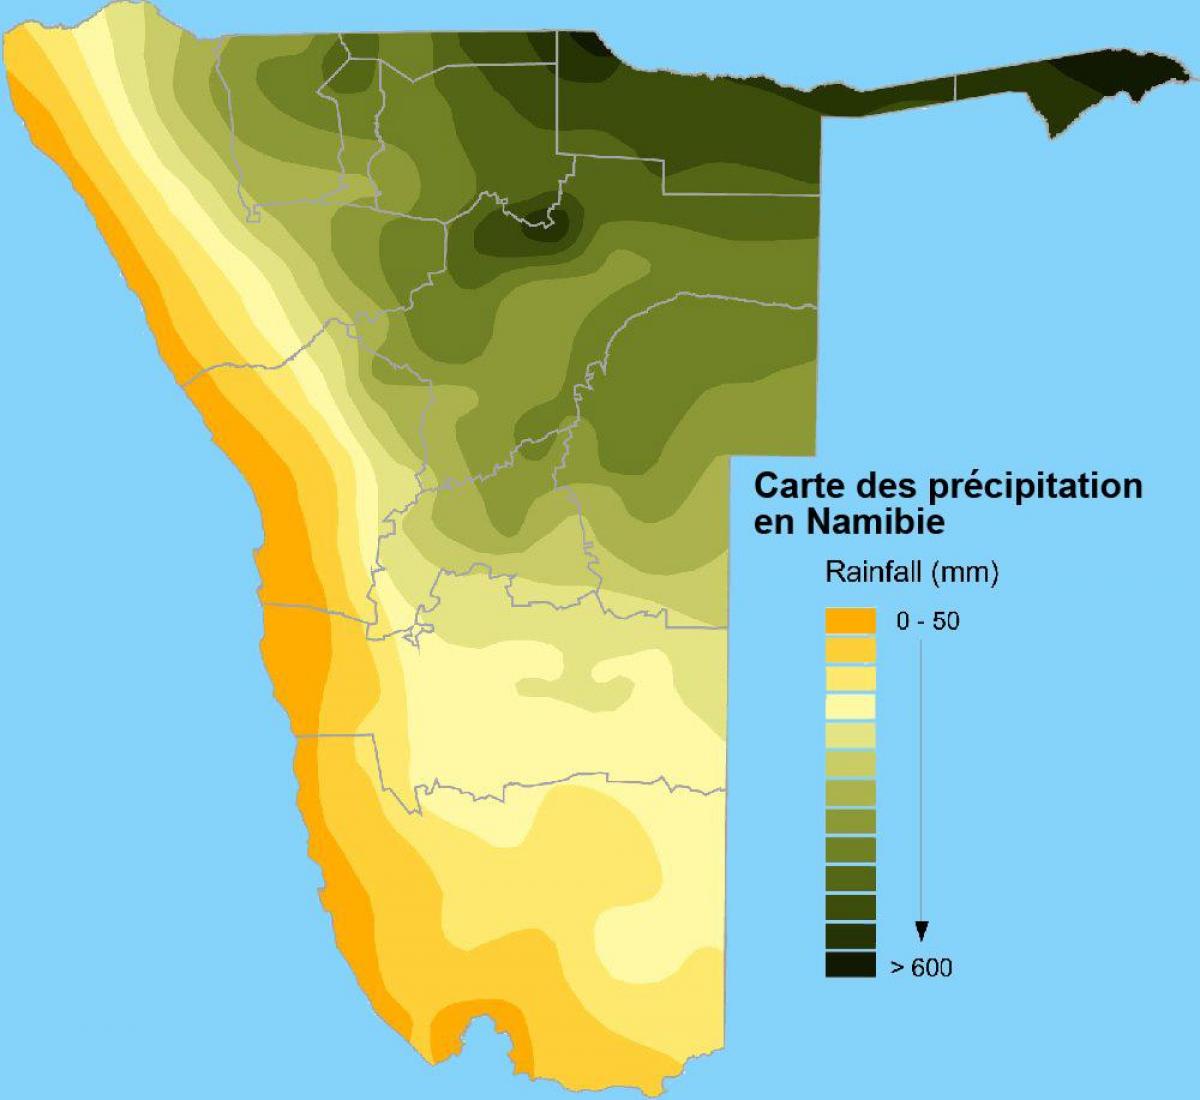 Peta curah hujan Namibia